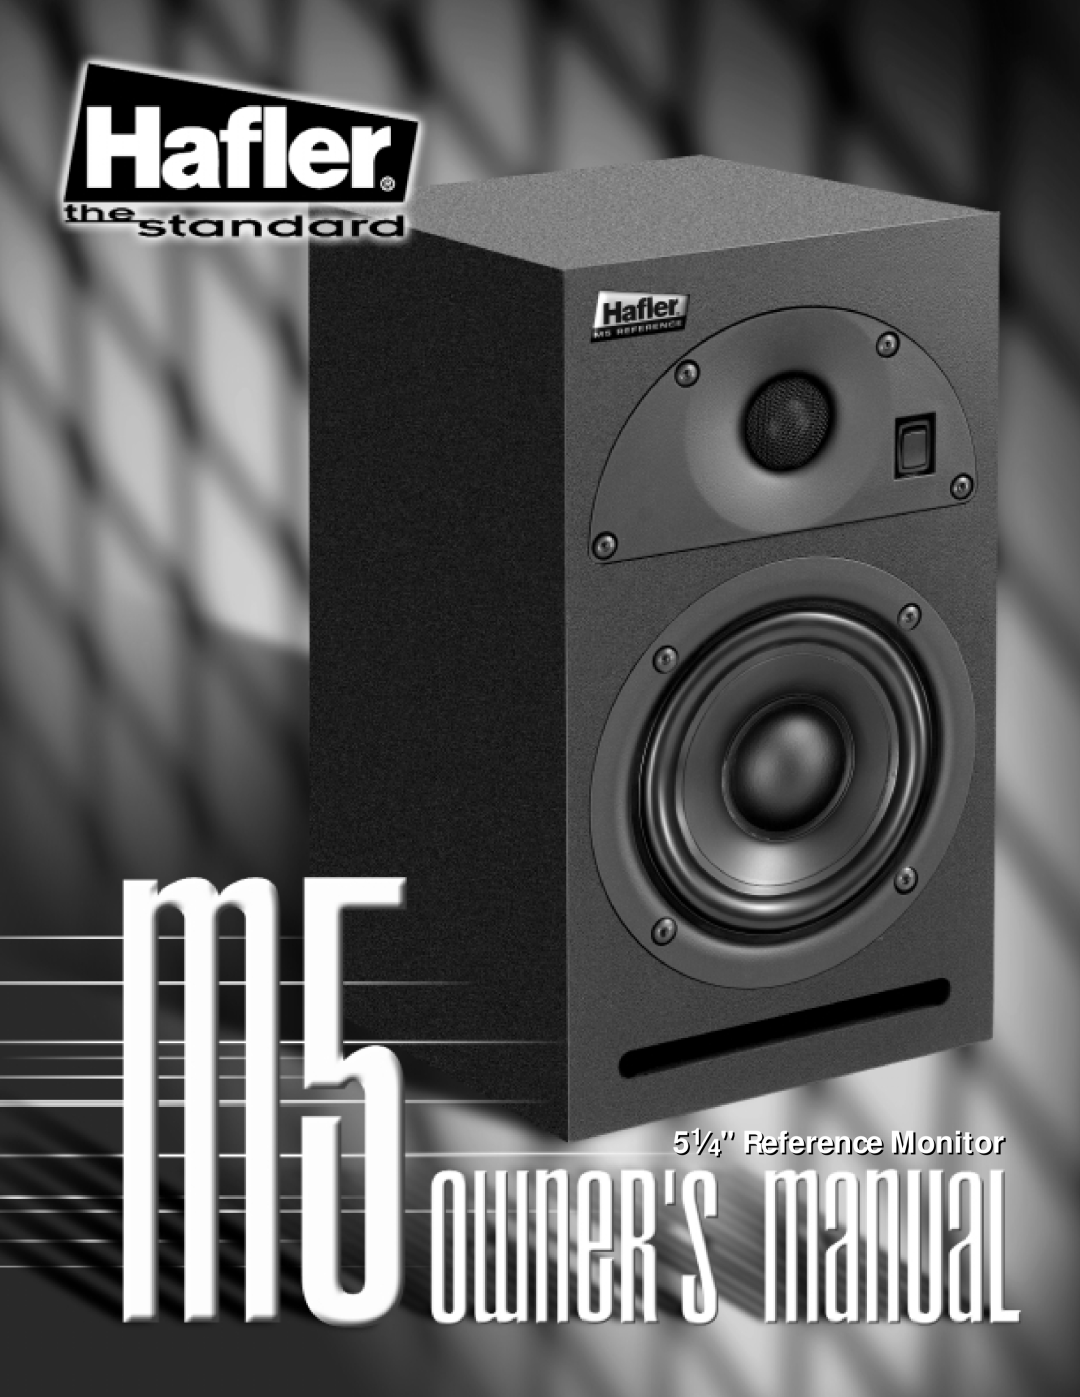 Hafler M5 manual 51⁄4 Reference Monitor 